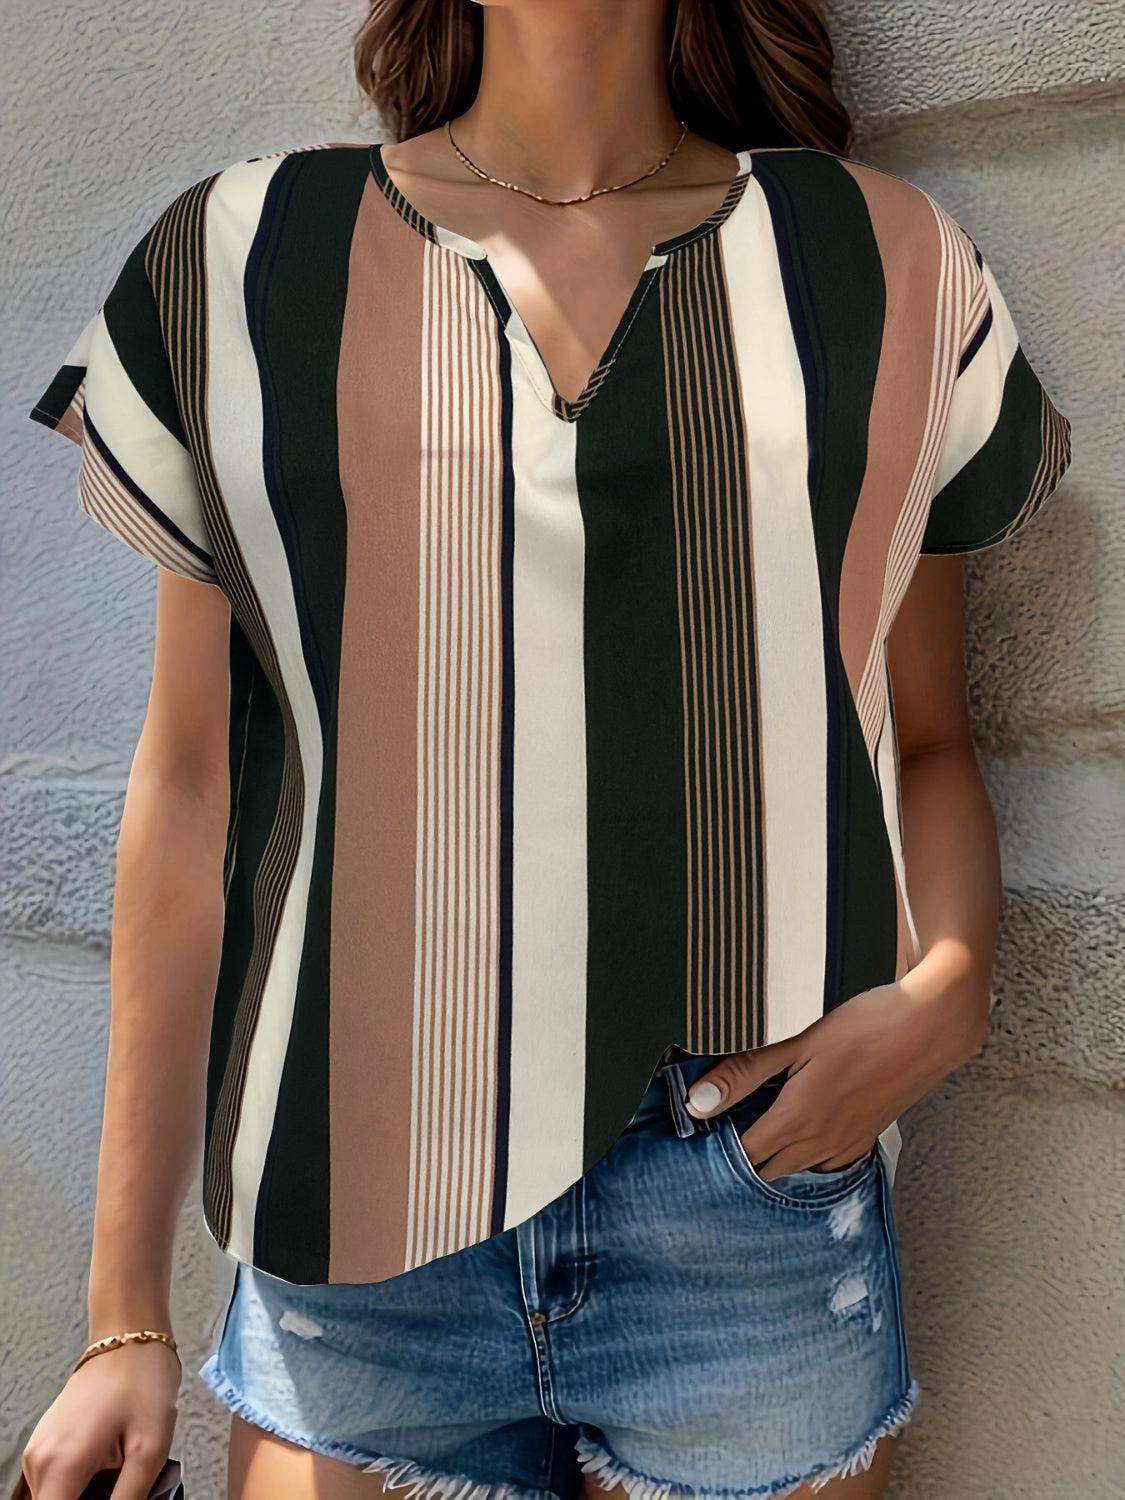 a woman wearing a striped shirt and denim shorts